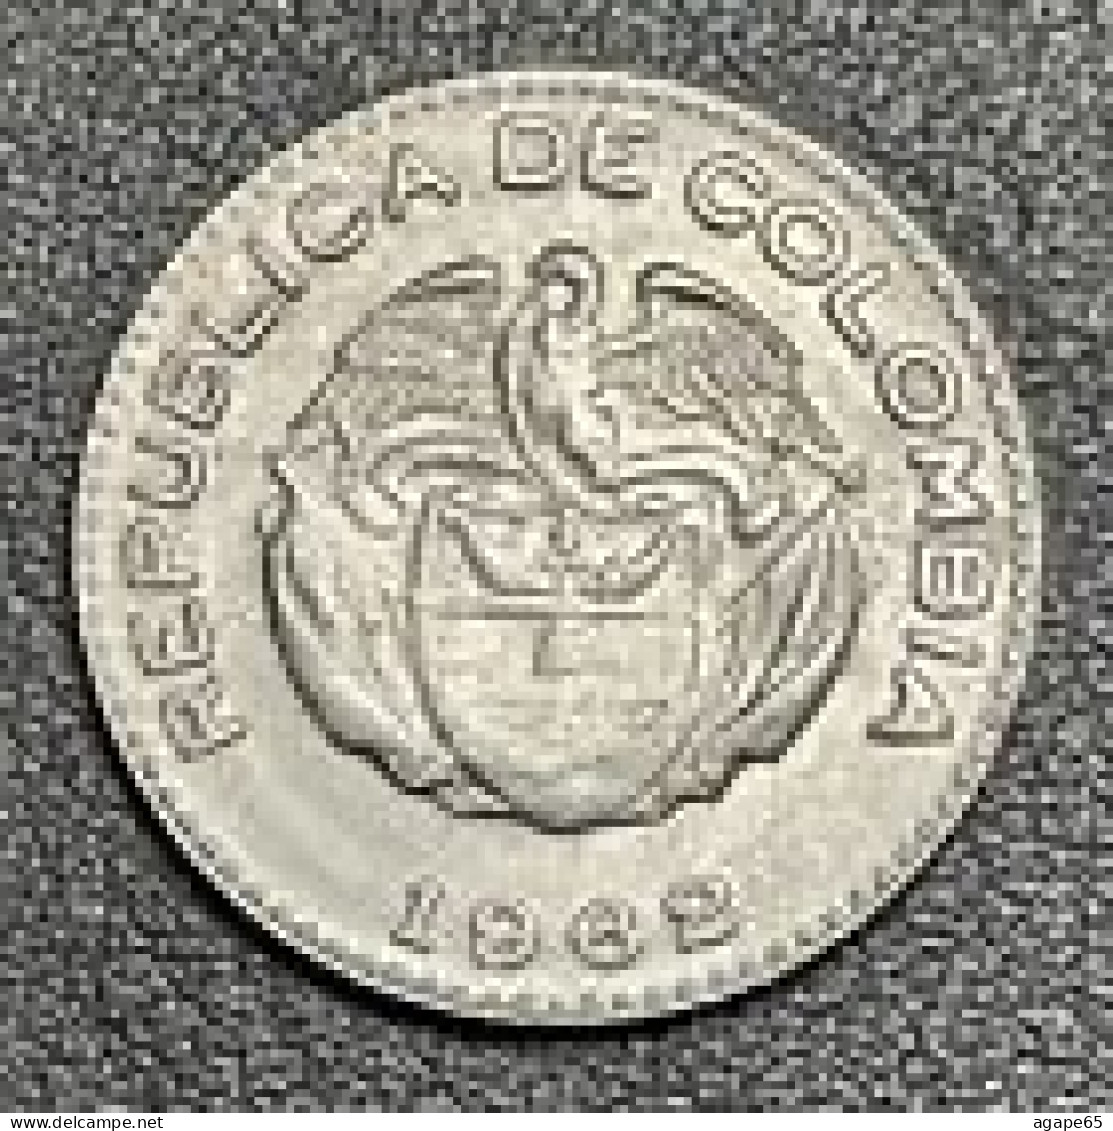 10 Centavos, Colombia, 1962 - Colombie